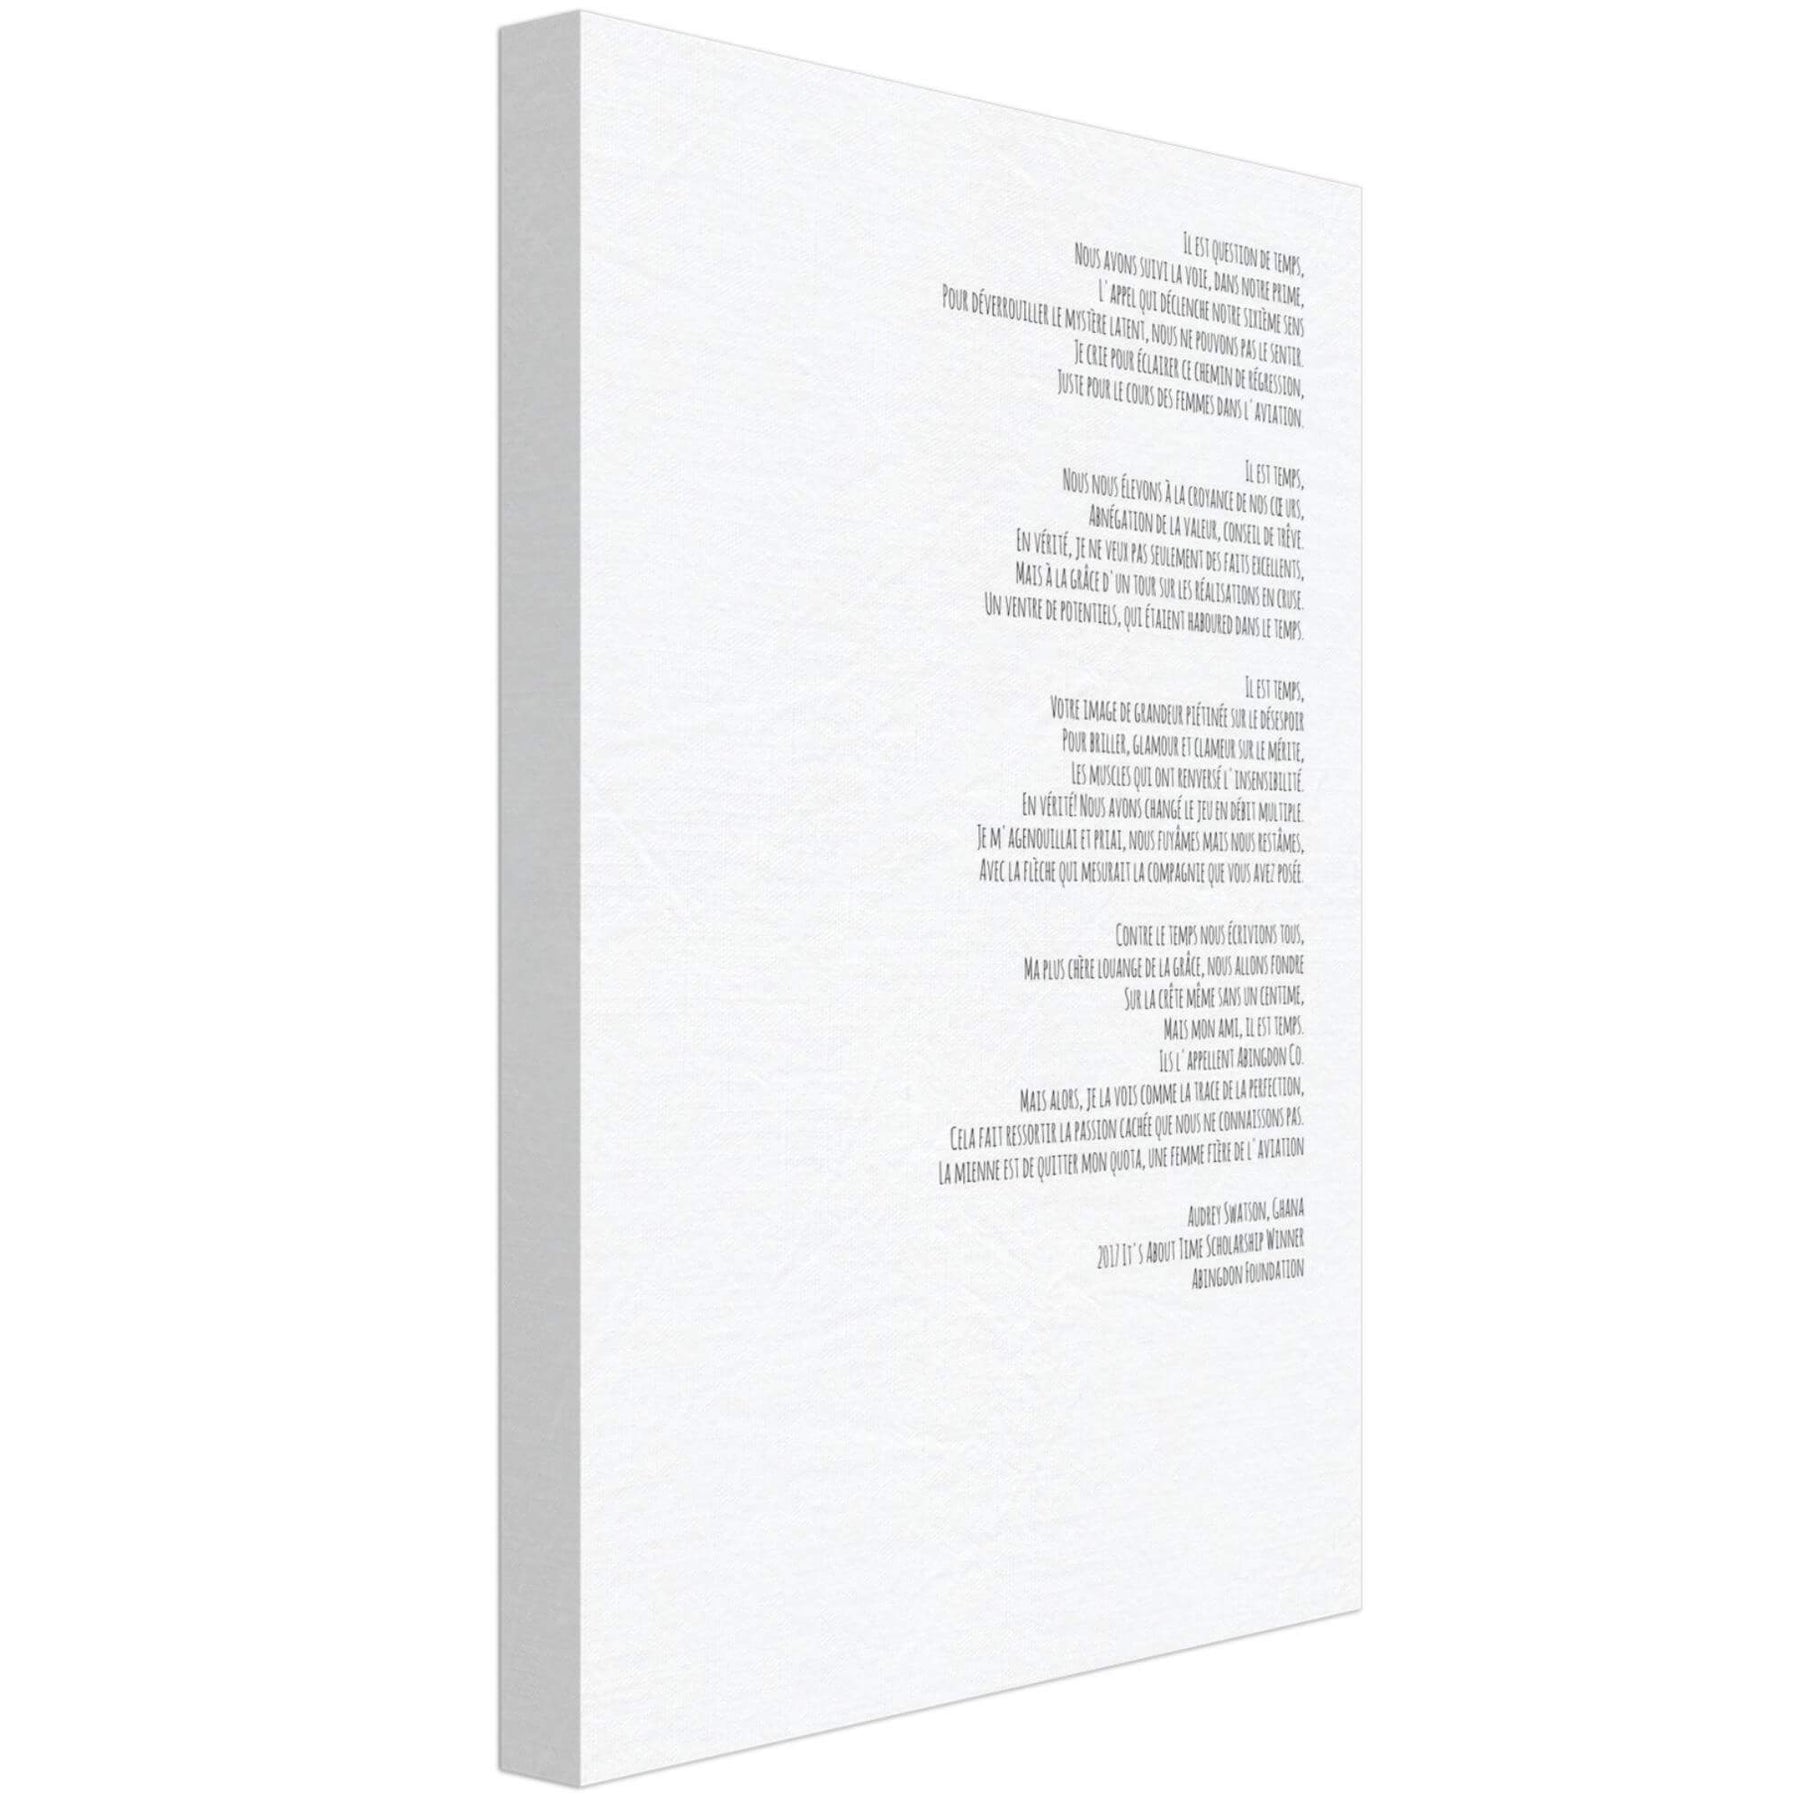 AVIATRIX Poem (French) on Canvas - The Abingdon Co.